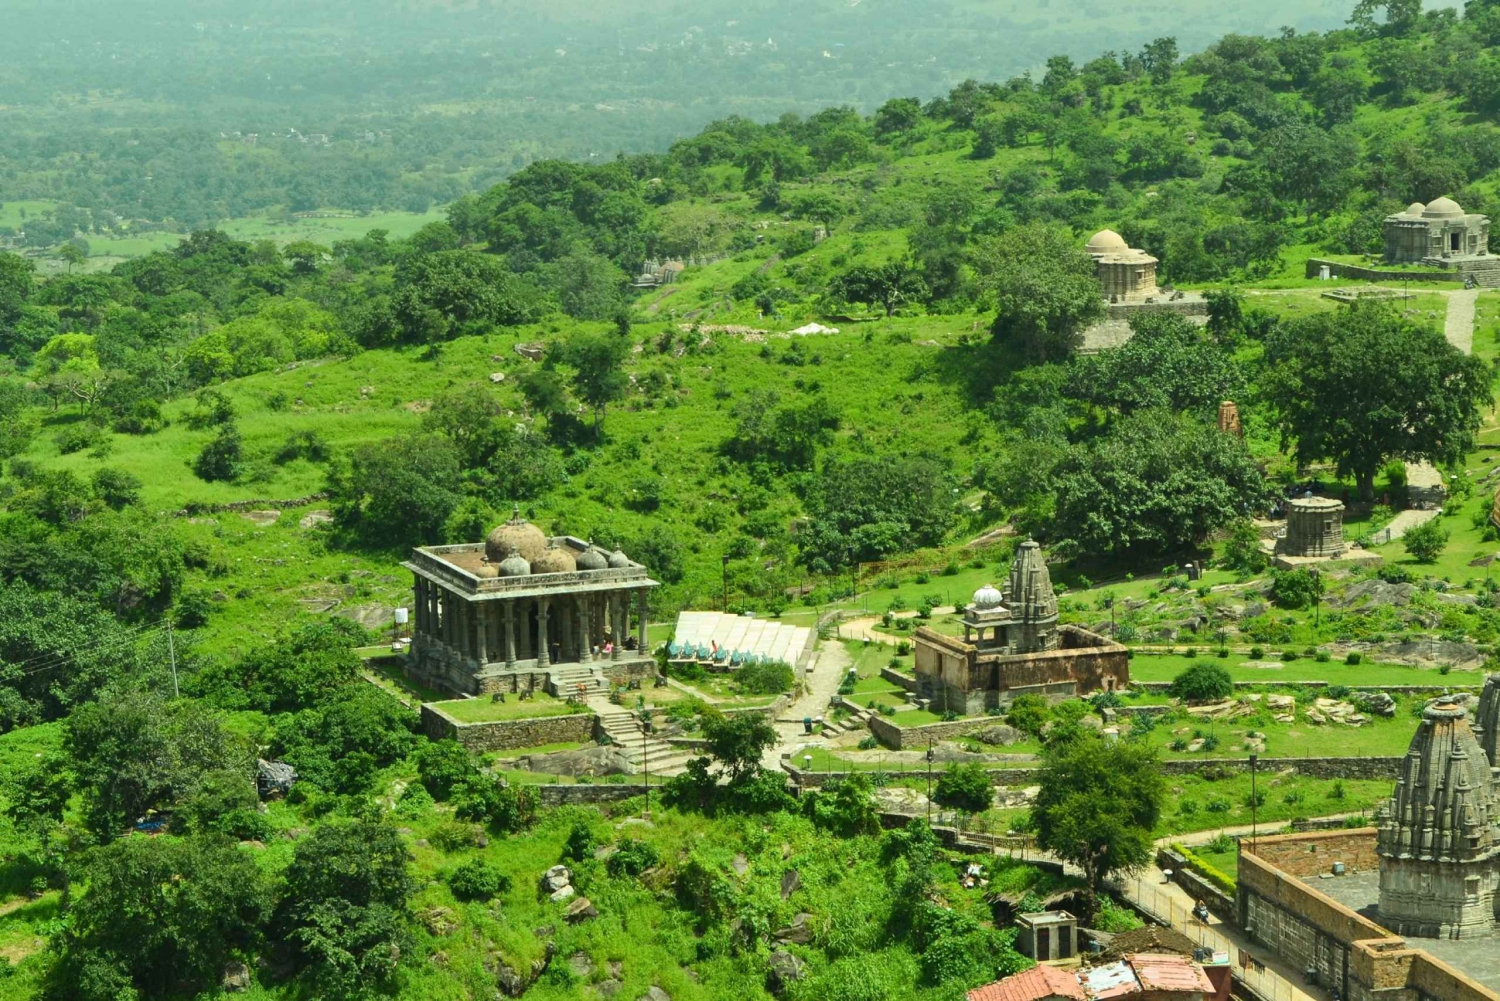 From Jodhpur: Kumbhalgarh Fort and Ranakpur Temple Day Trip